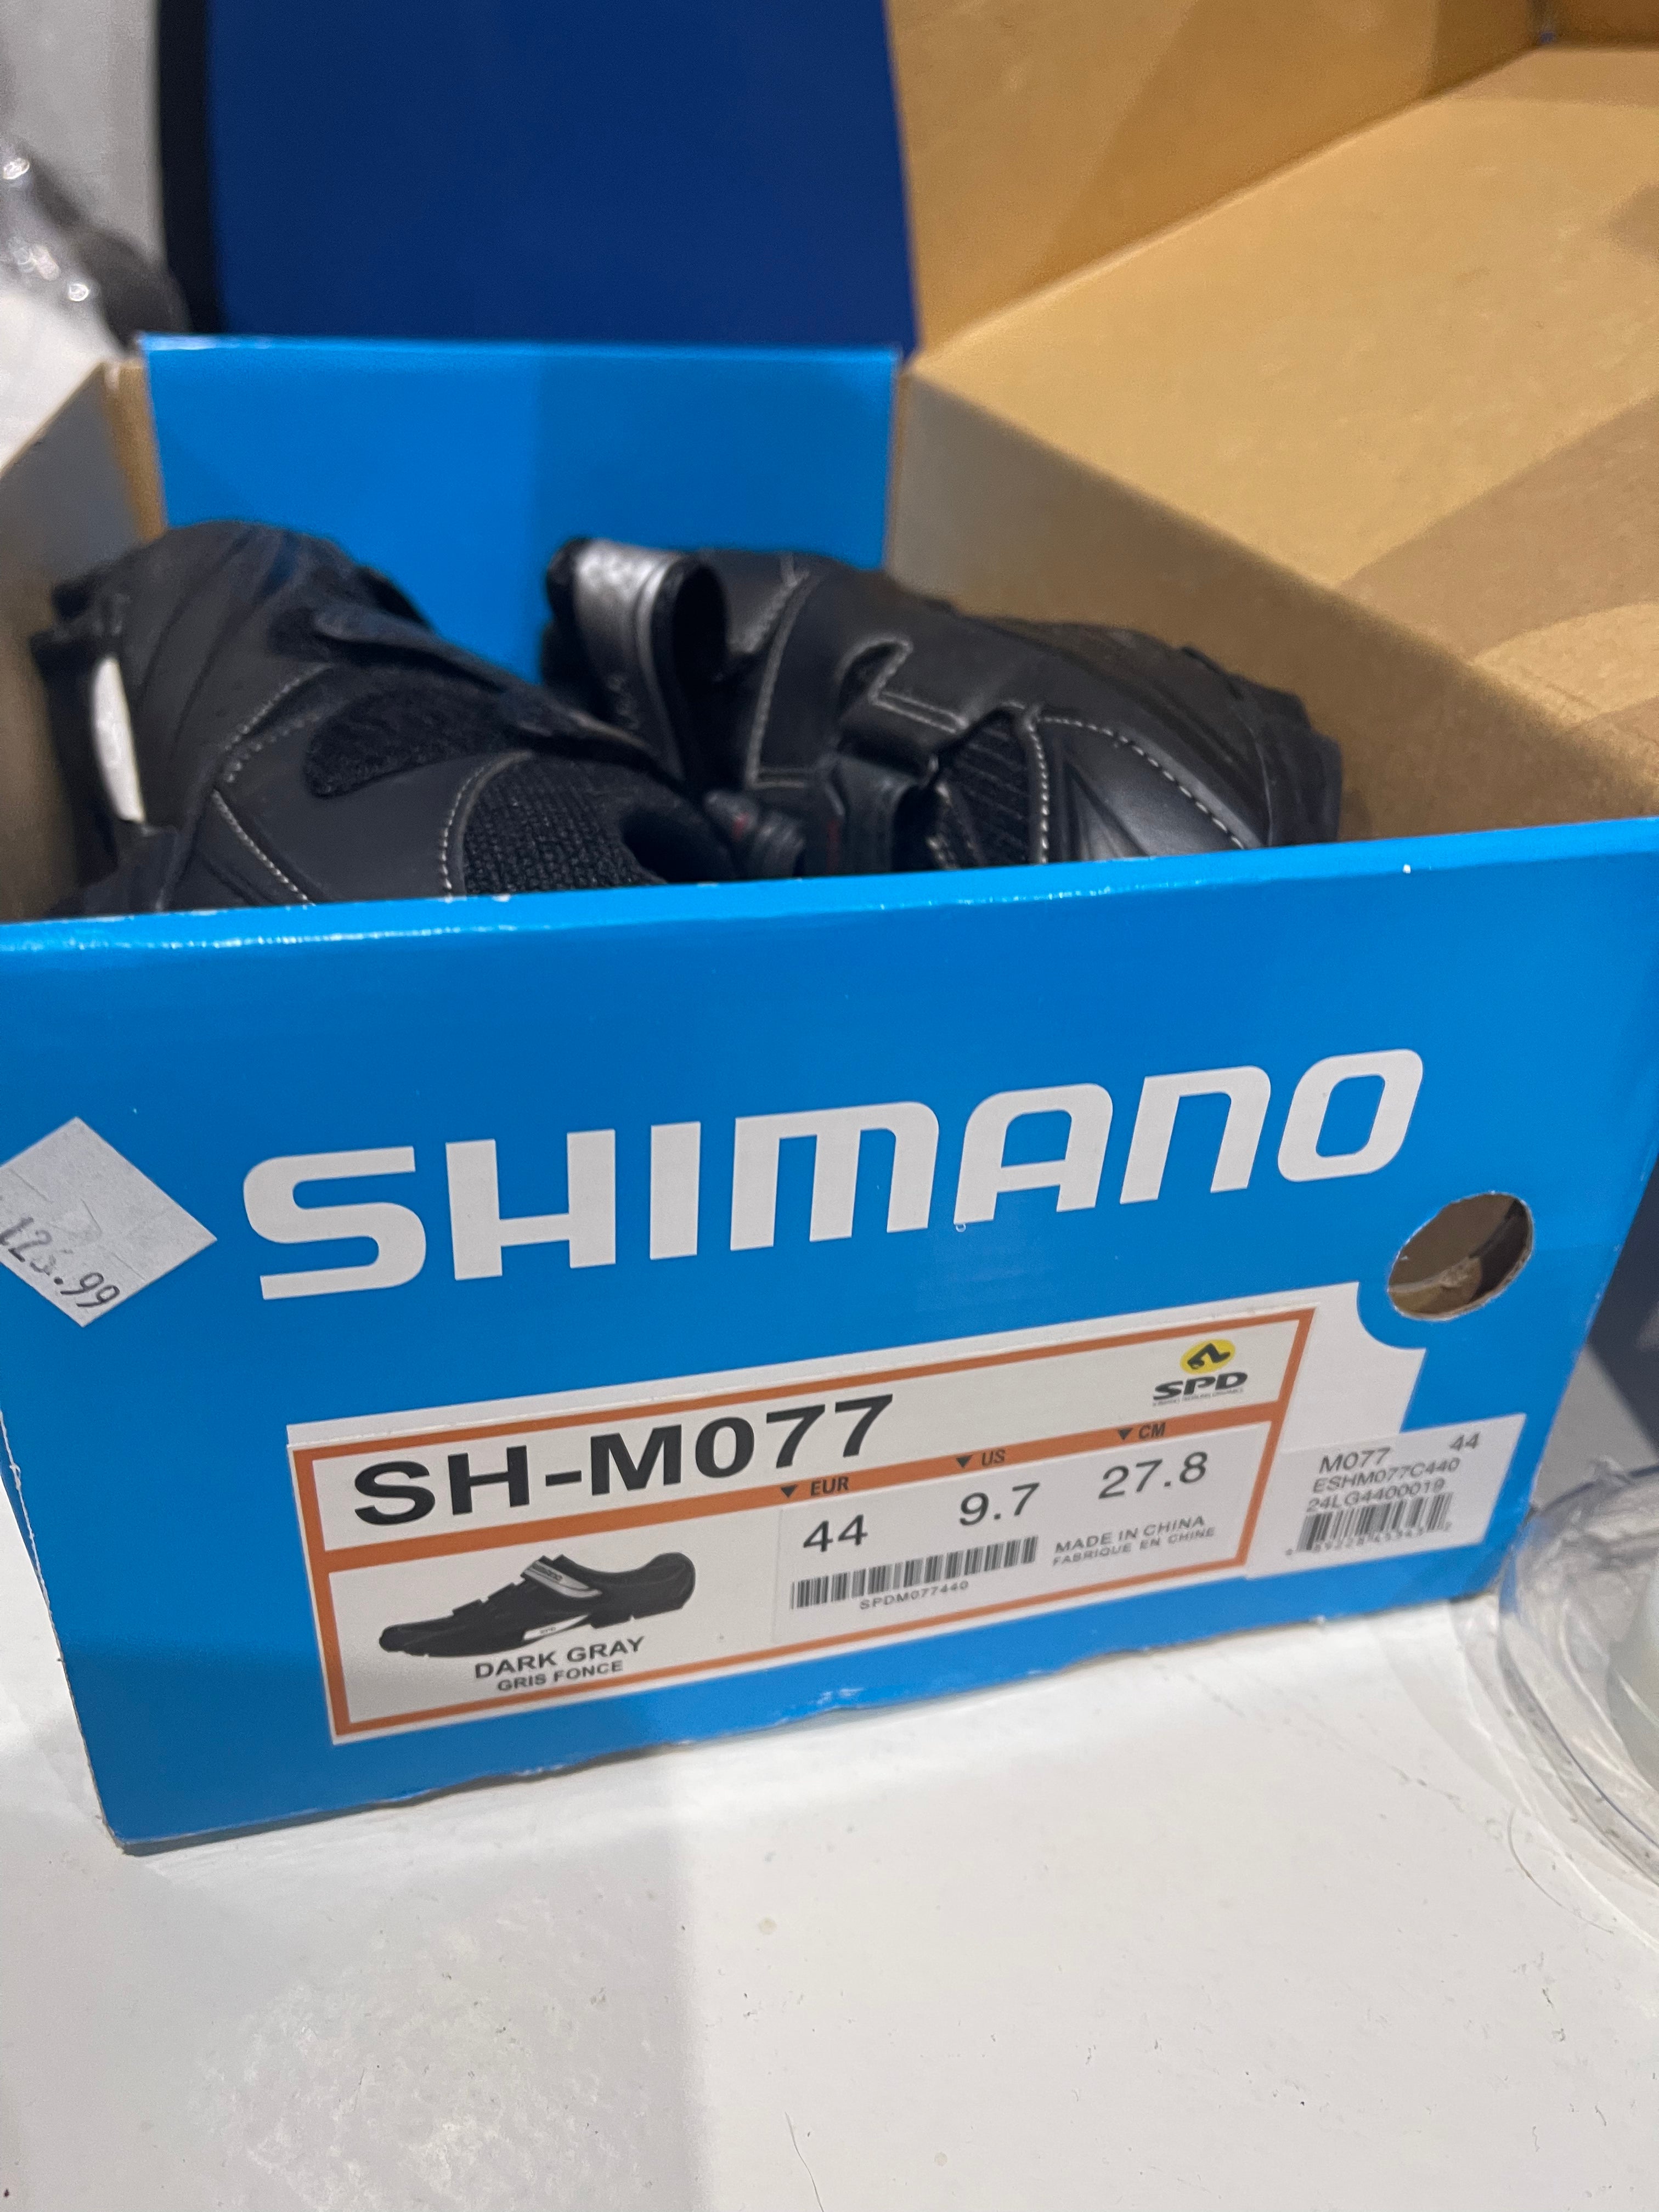 SH-M077 Espadrilles for Shimano Bikes